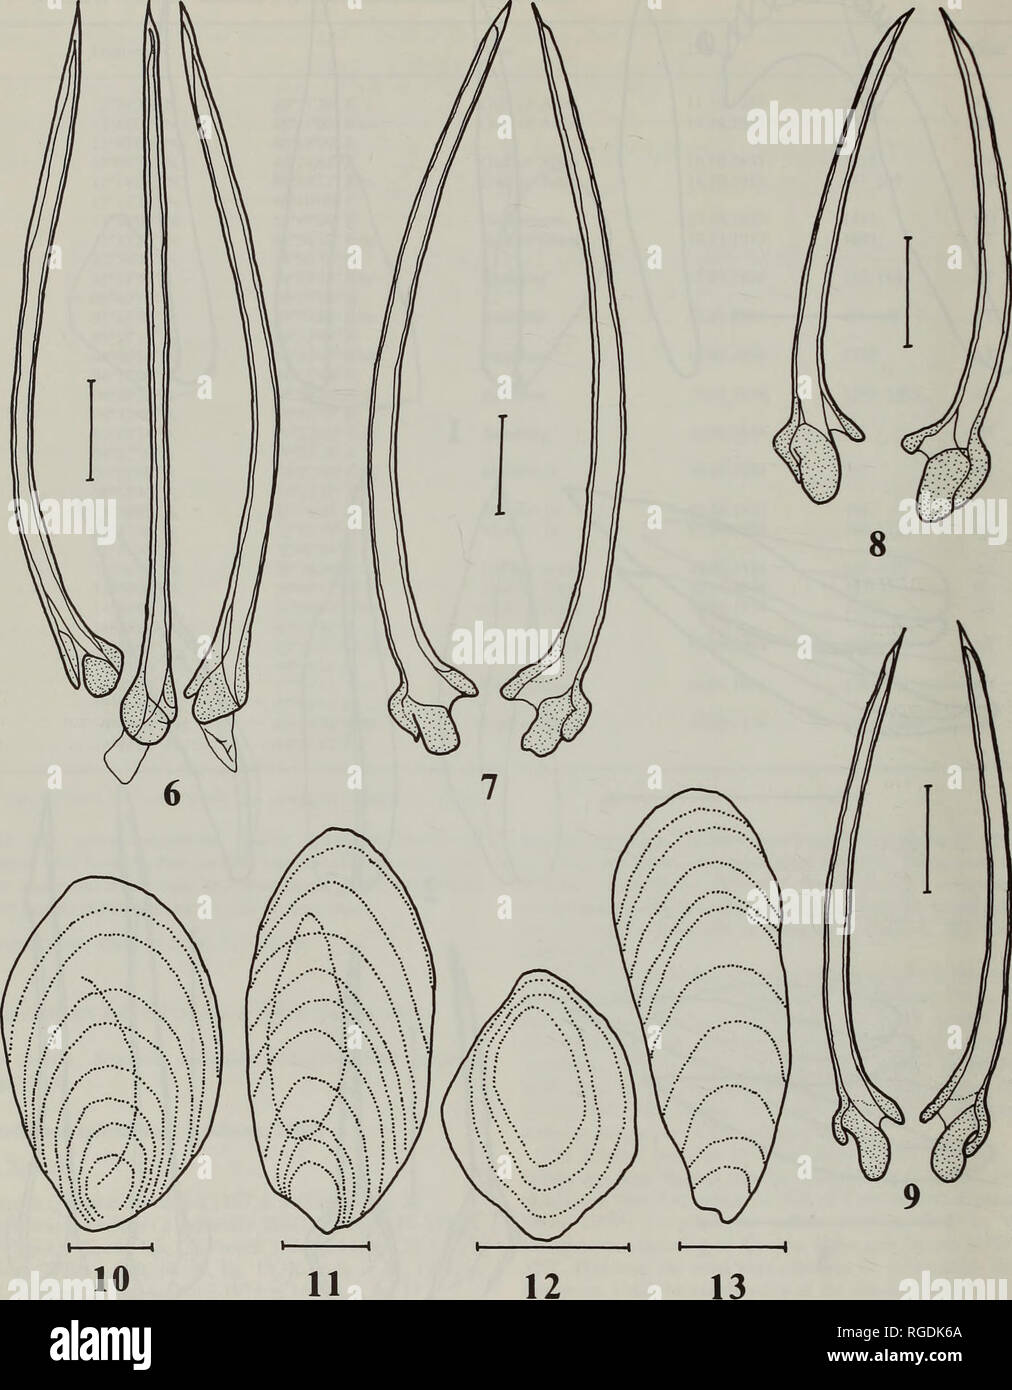 . Bulletin of the Natural History Museum Zoology. A.V. SYSOEV. Figs 6-13 Radulae (6-9) and opercula (10-13). 6 - Typhlomangelia maldivica Sysoev, new species, paratype, stn 143, H = 27.8 mm; 7 - Bathytoma (Parabathytomaj oldhami(E.A. Smith, 1899), stn 145, H = 41.0mm; 8-B. (P.) regnans Melvill, 1918, stn 34, H = 26.6mm; 9-B. (P.)fissa(von Martens, 1901), stn 176, H = 35.3 mm; 10 - Splendrillia zanzibarica Sysoev, new species, holotype; 11 - Inquisitor indistinctus Sysoev, new species, paratype, stn 145, H = 27.4 mm; 12,13- Borsonia (Cordieria) symbiophora Sysoev, new species, paratypes, stn 18 Stock Photo